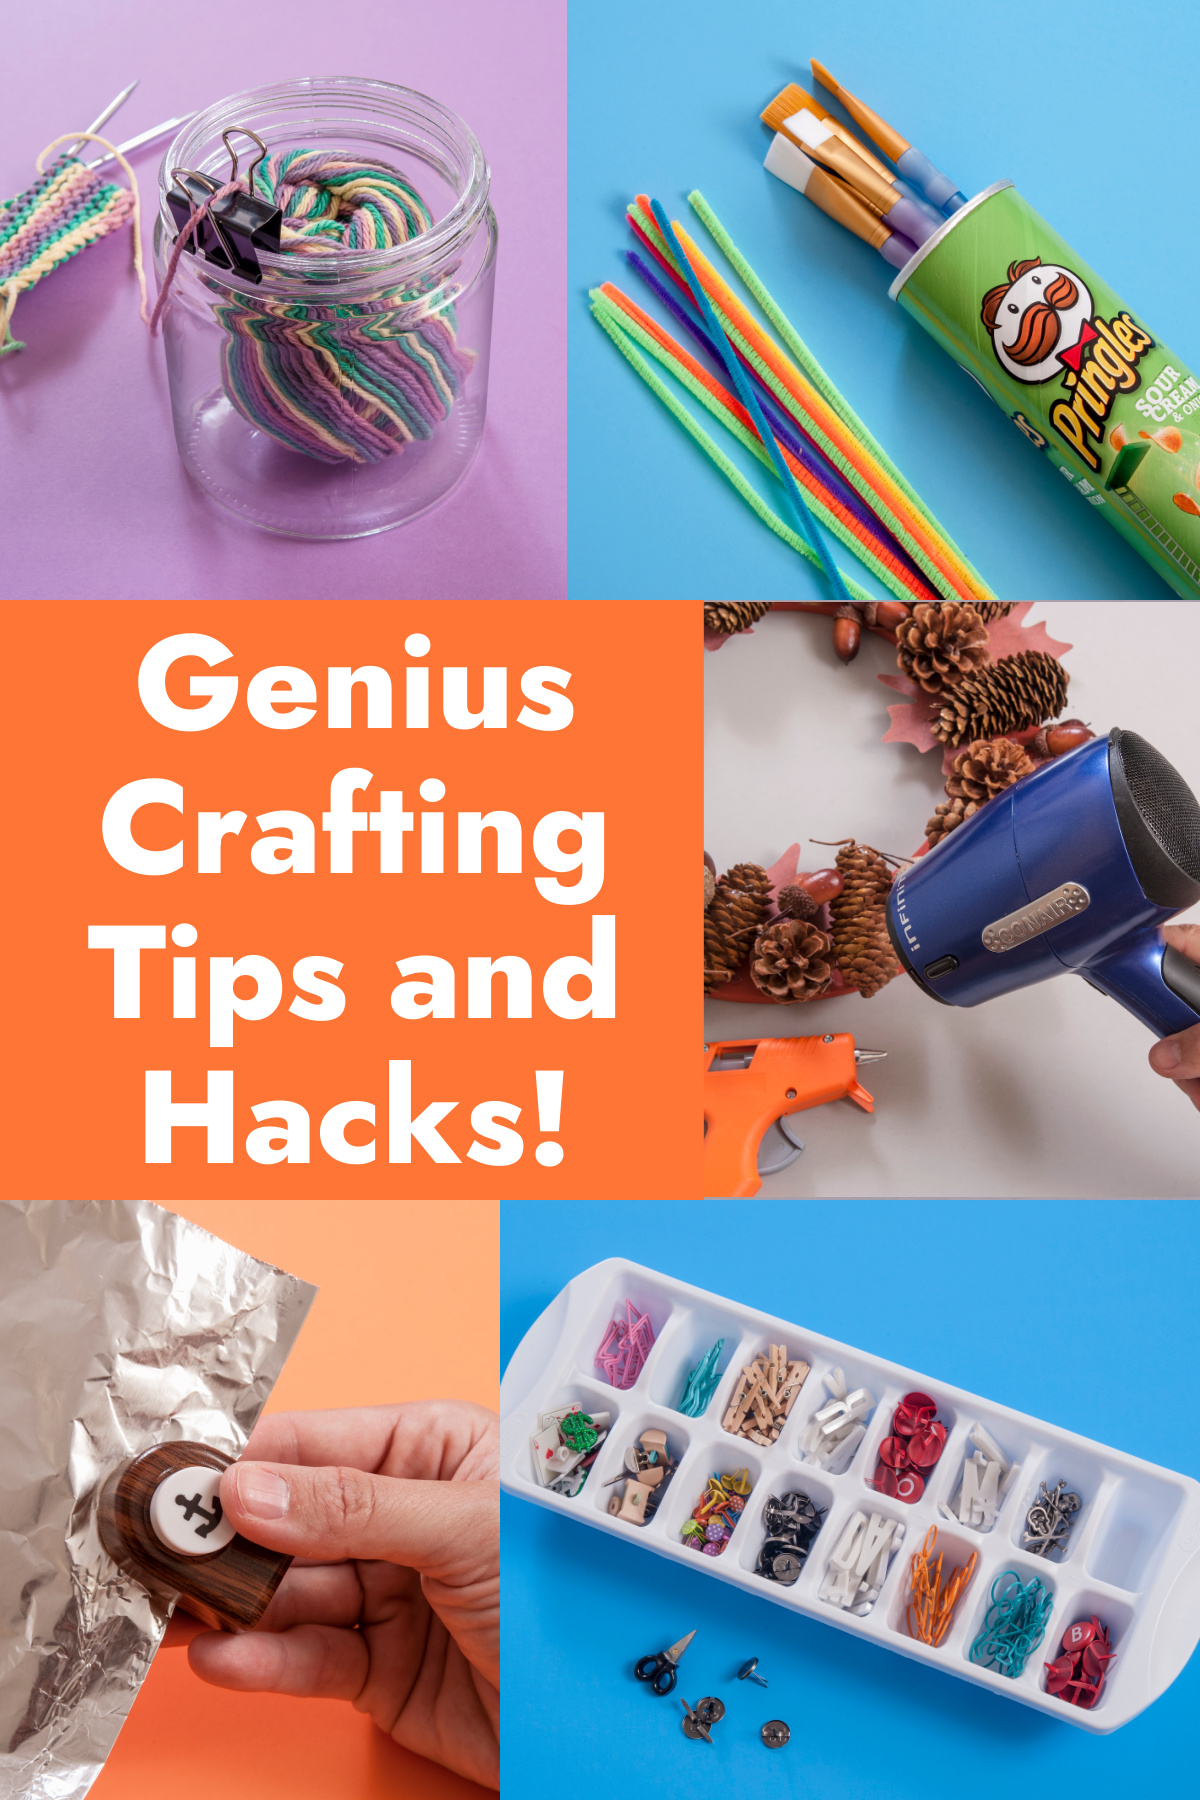 https://modpodgerocksblog.b-cdn.net/wp-content/uploads/2020/08/Genius-Crafting-Tips-and-Hacks.jpg